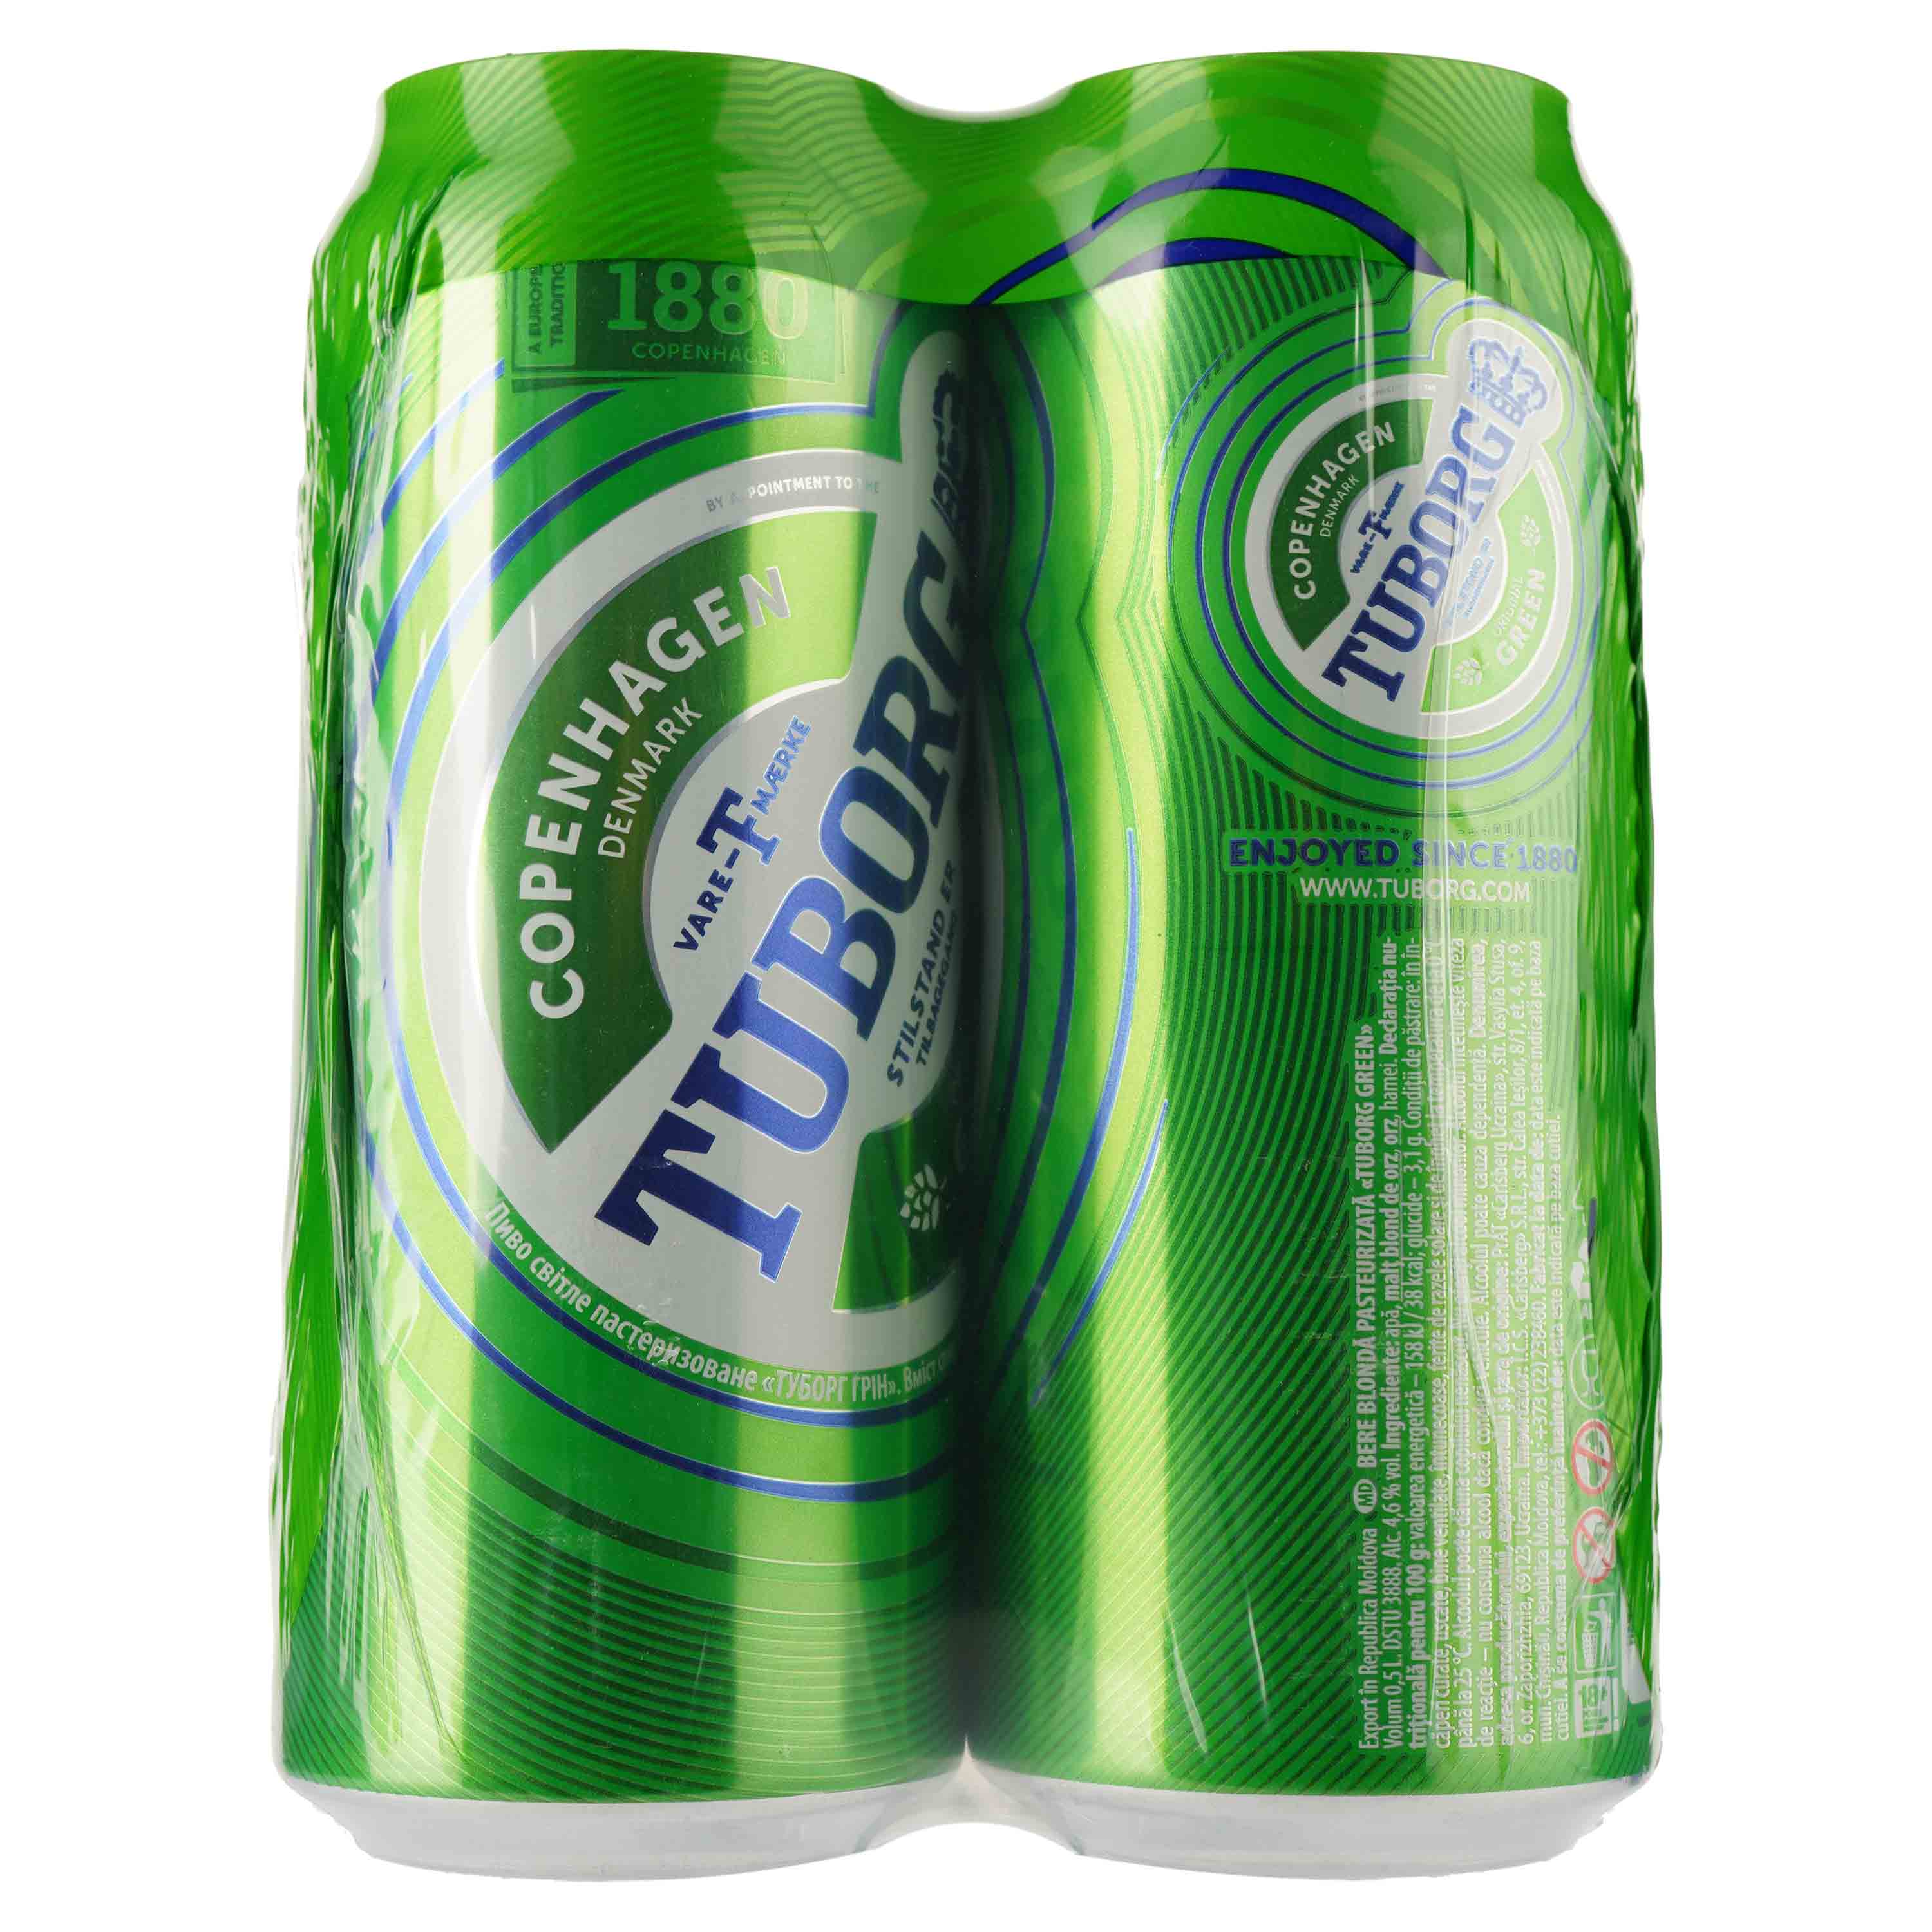 Пиво Tuborg Green, светлое, 4,6%, ж/б, 2 л (4 шт. по 0,5 л) (224869) - фото 2